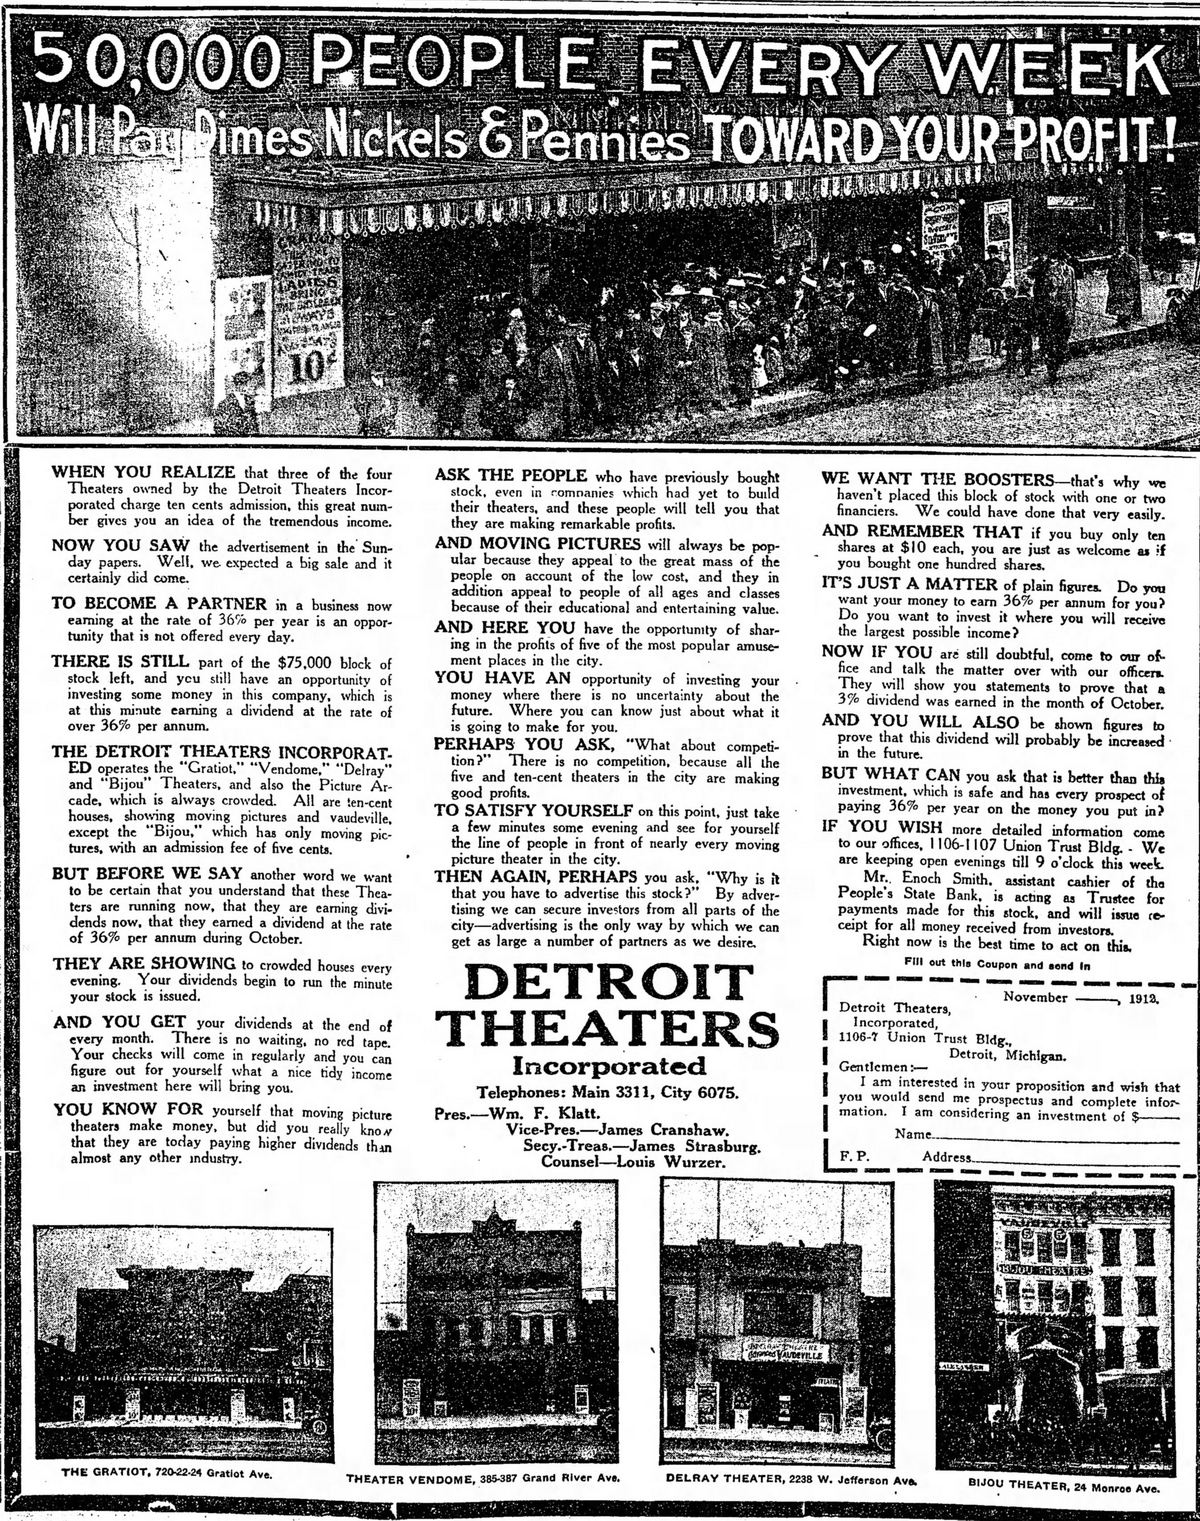 Gratiot Theatre - November 1912 Ad (newer photo)